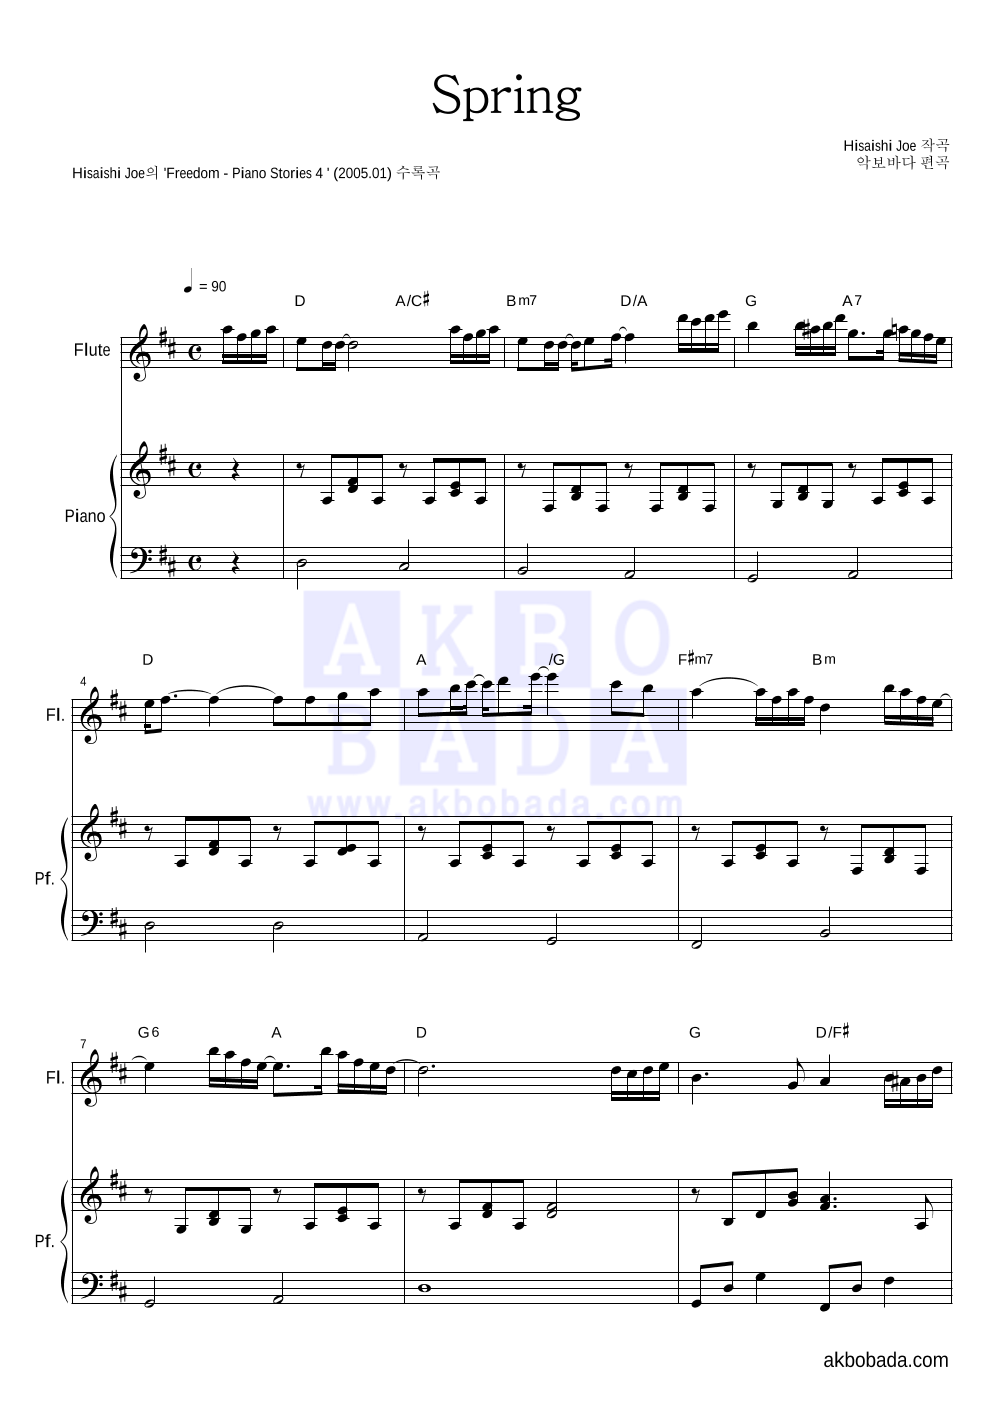 Hisaishi Joe - Spring 플룻&피아노 악보 